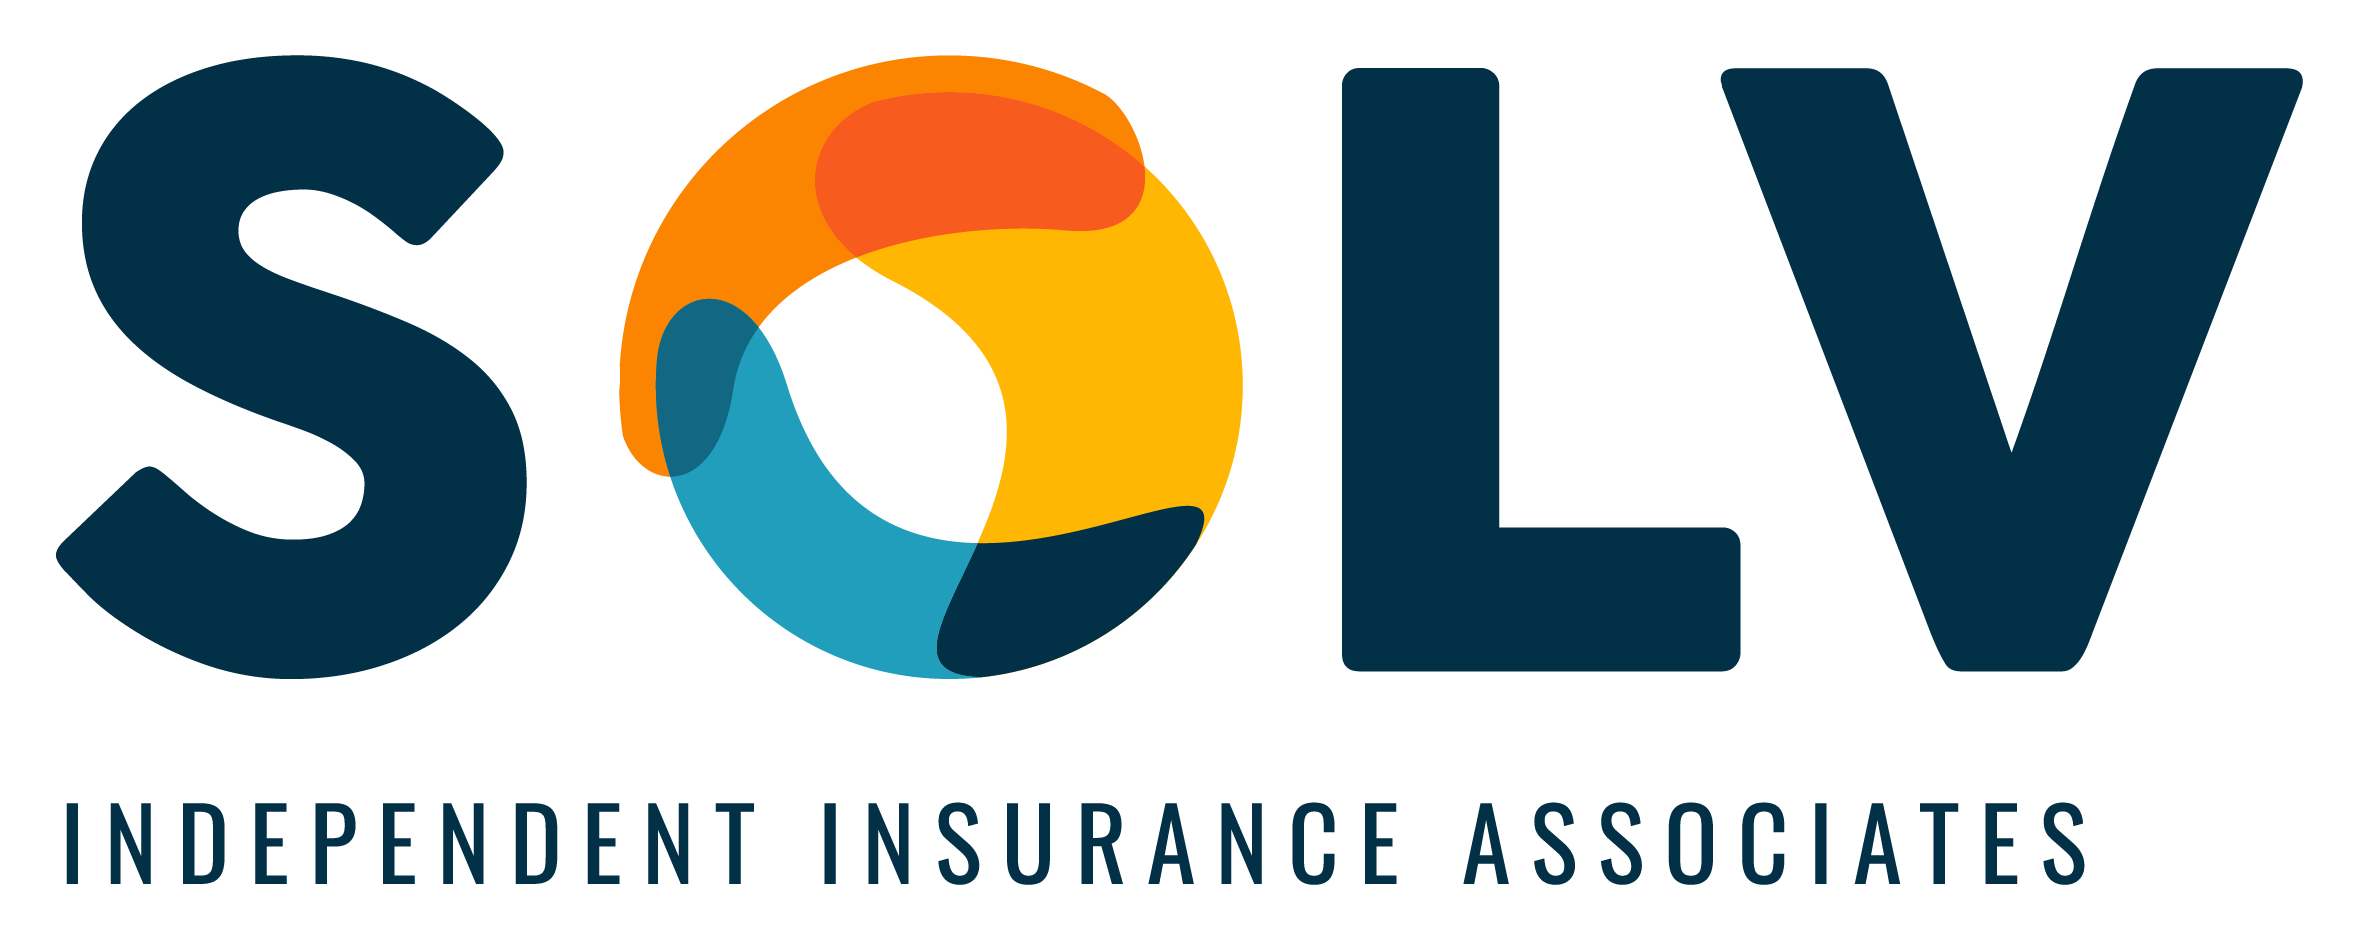 SolV Independent Insurance Associates